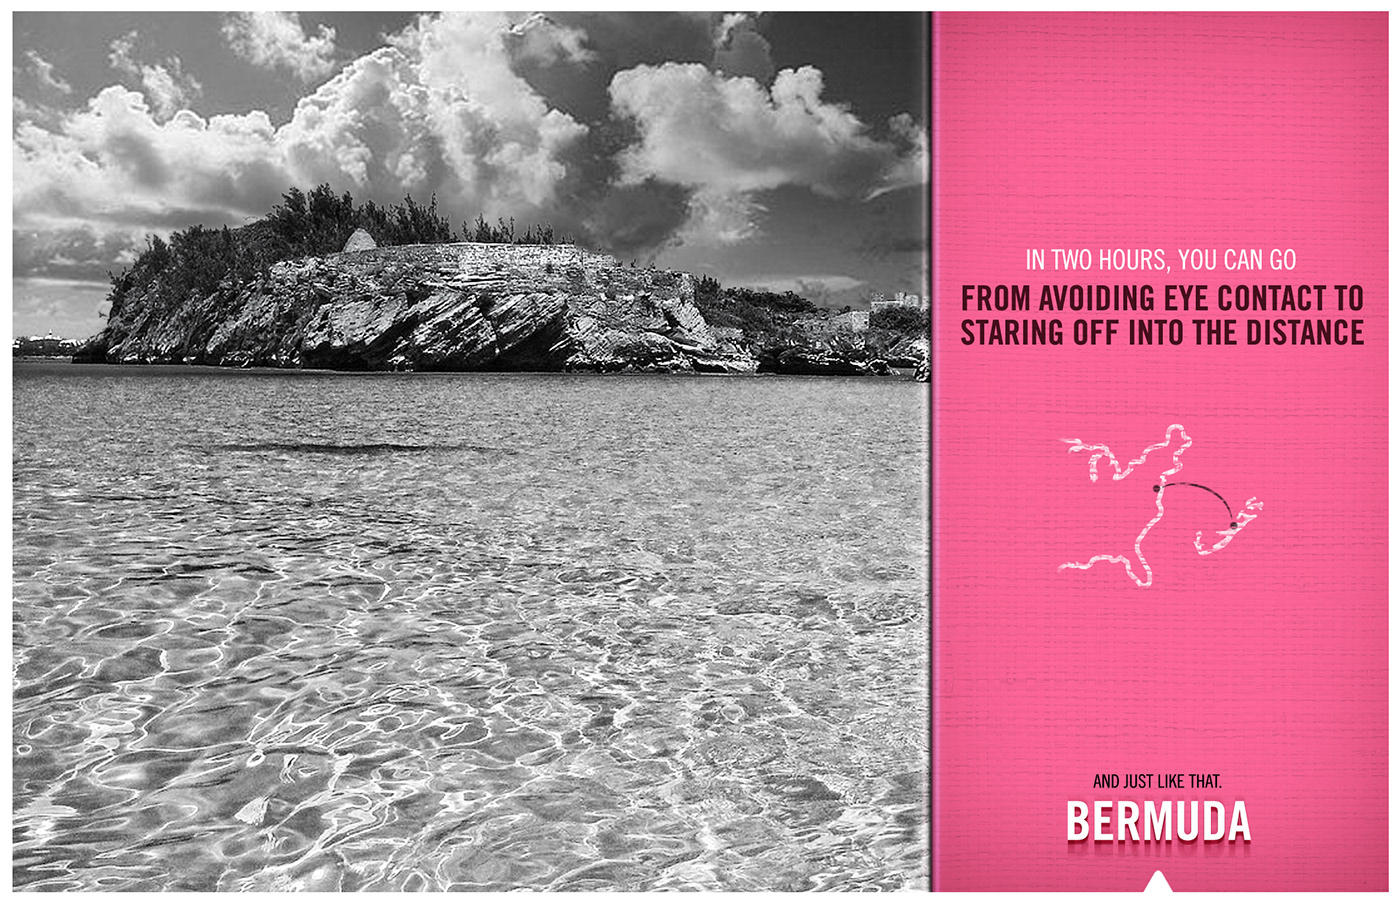 Bermuda tourism vacation Travel